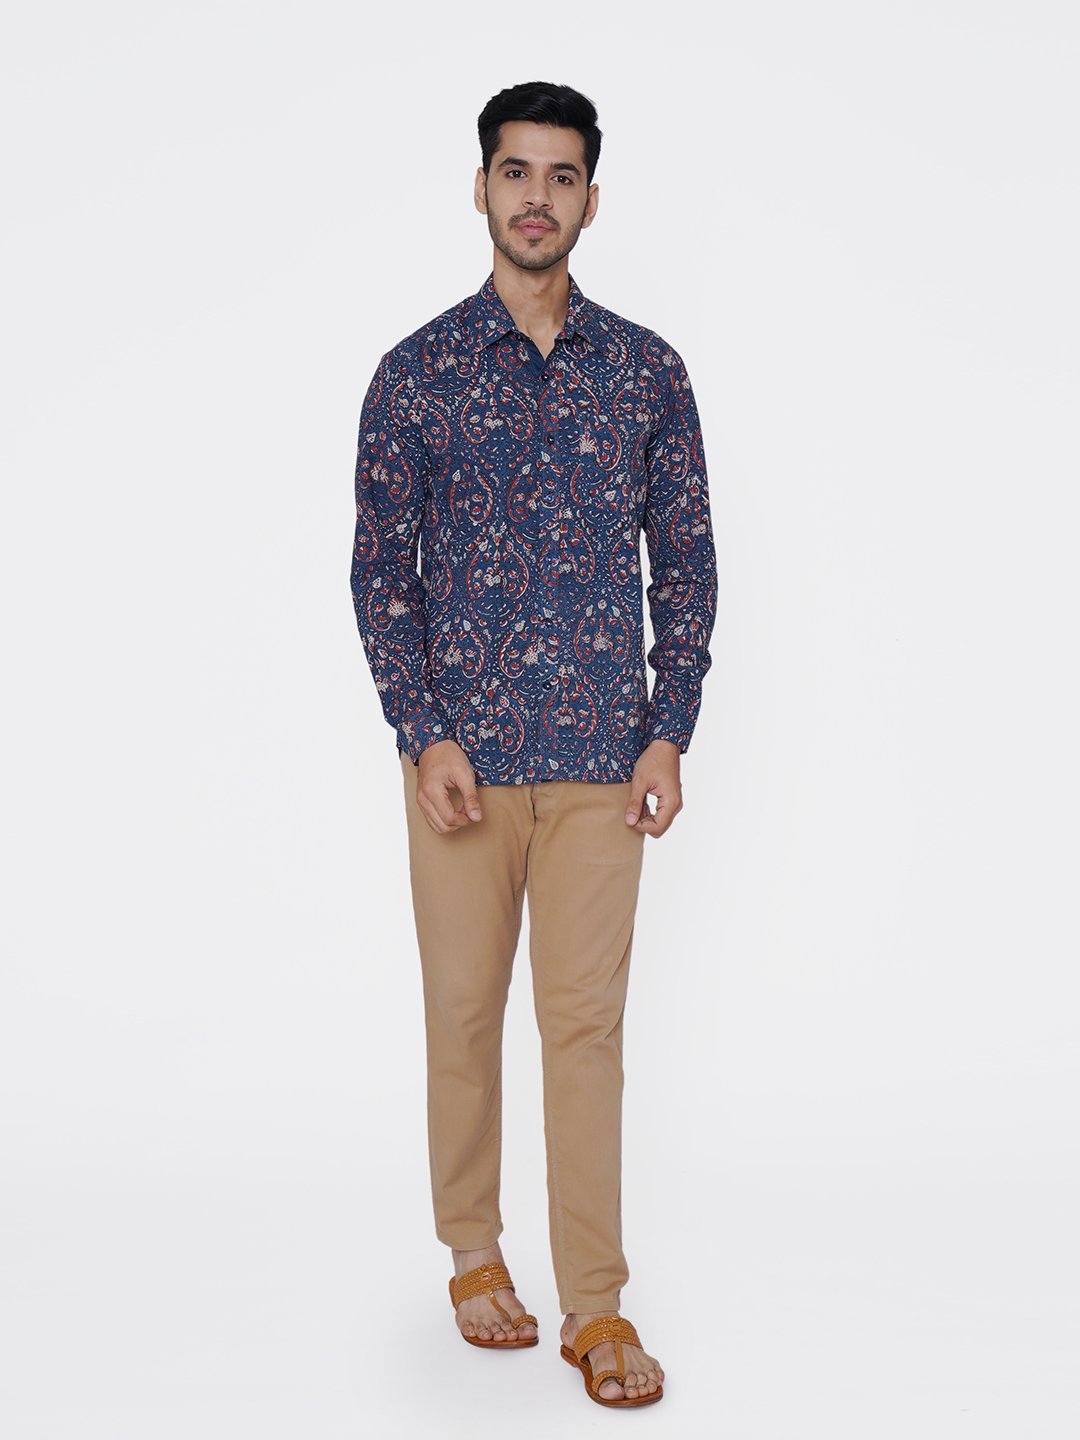 WINTAGE Men's Jaipur Cotton Tropical Hawaiian Batik Casual Shirt: Multicolor